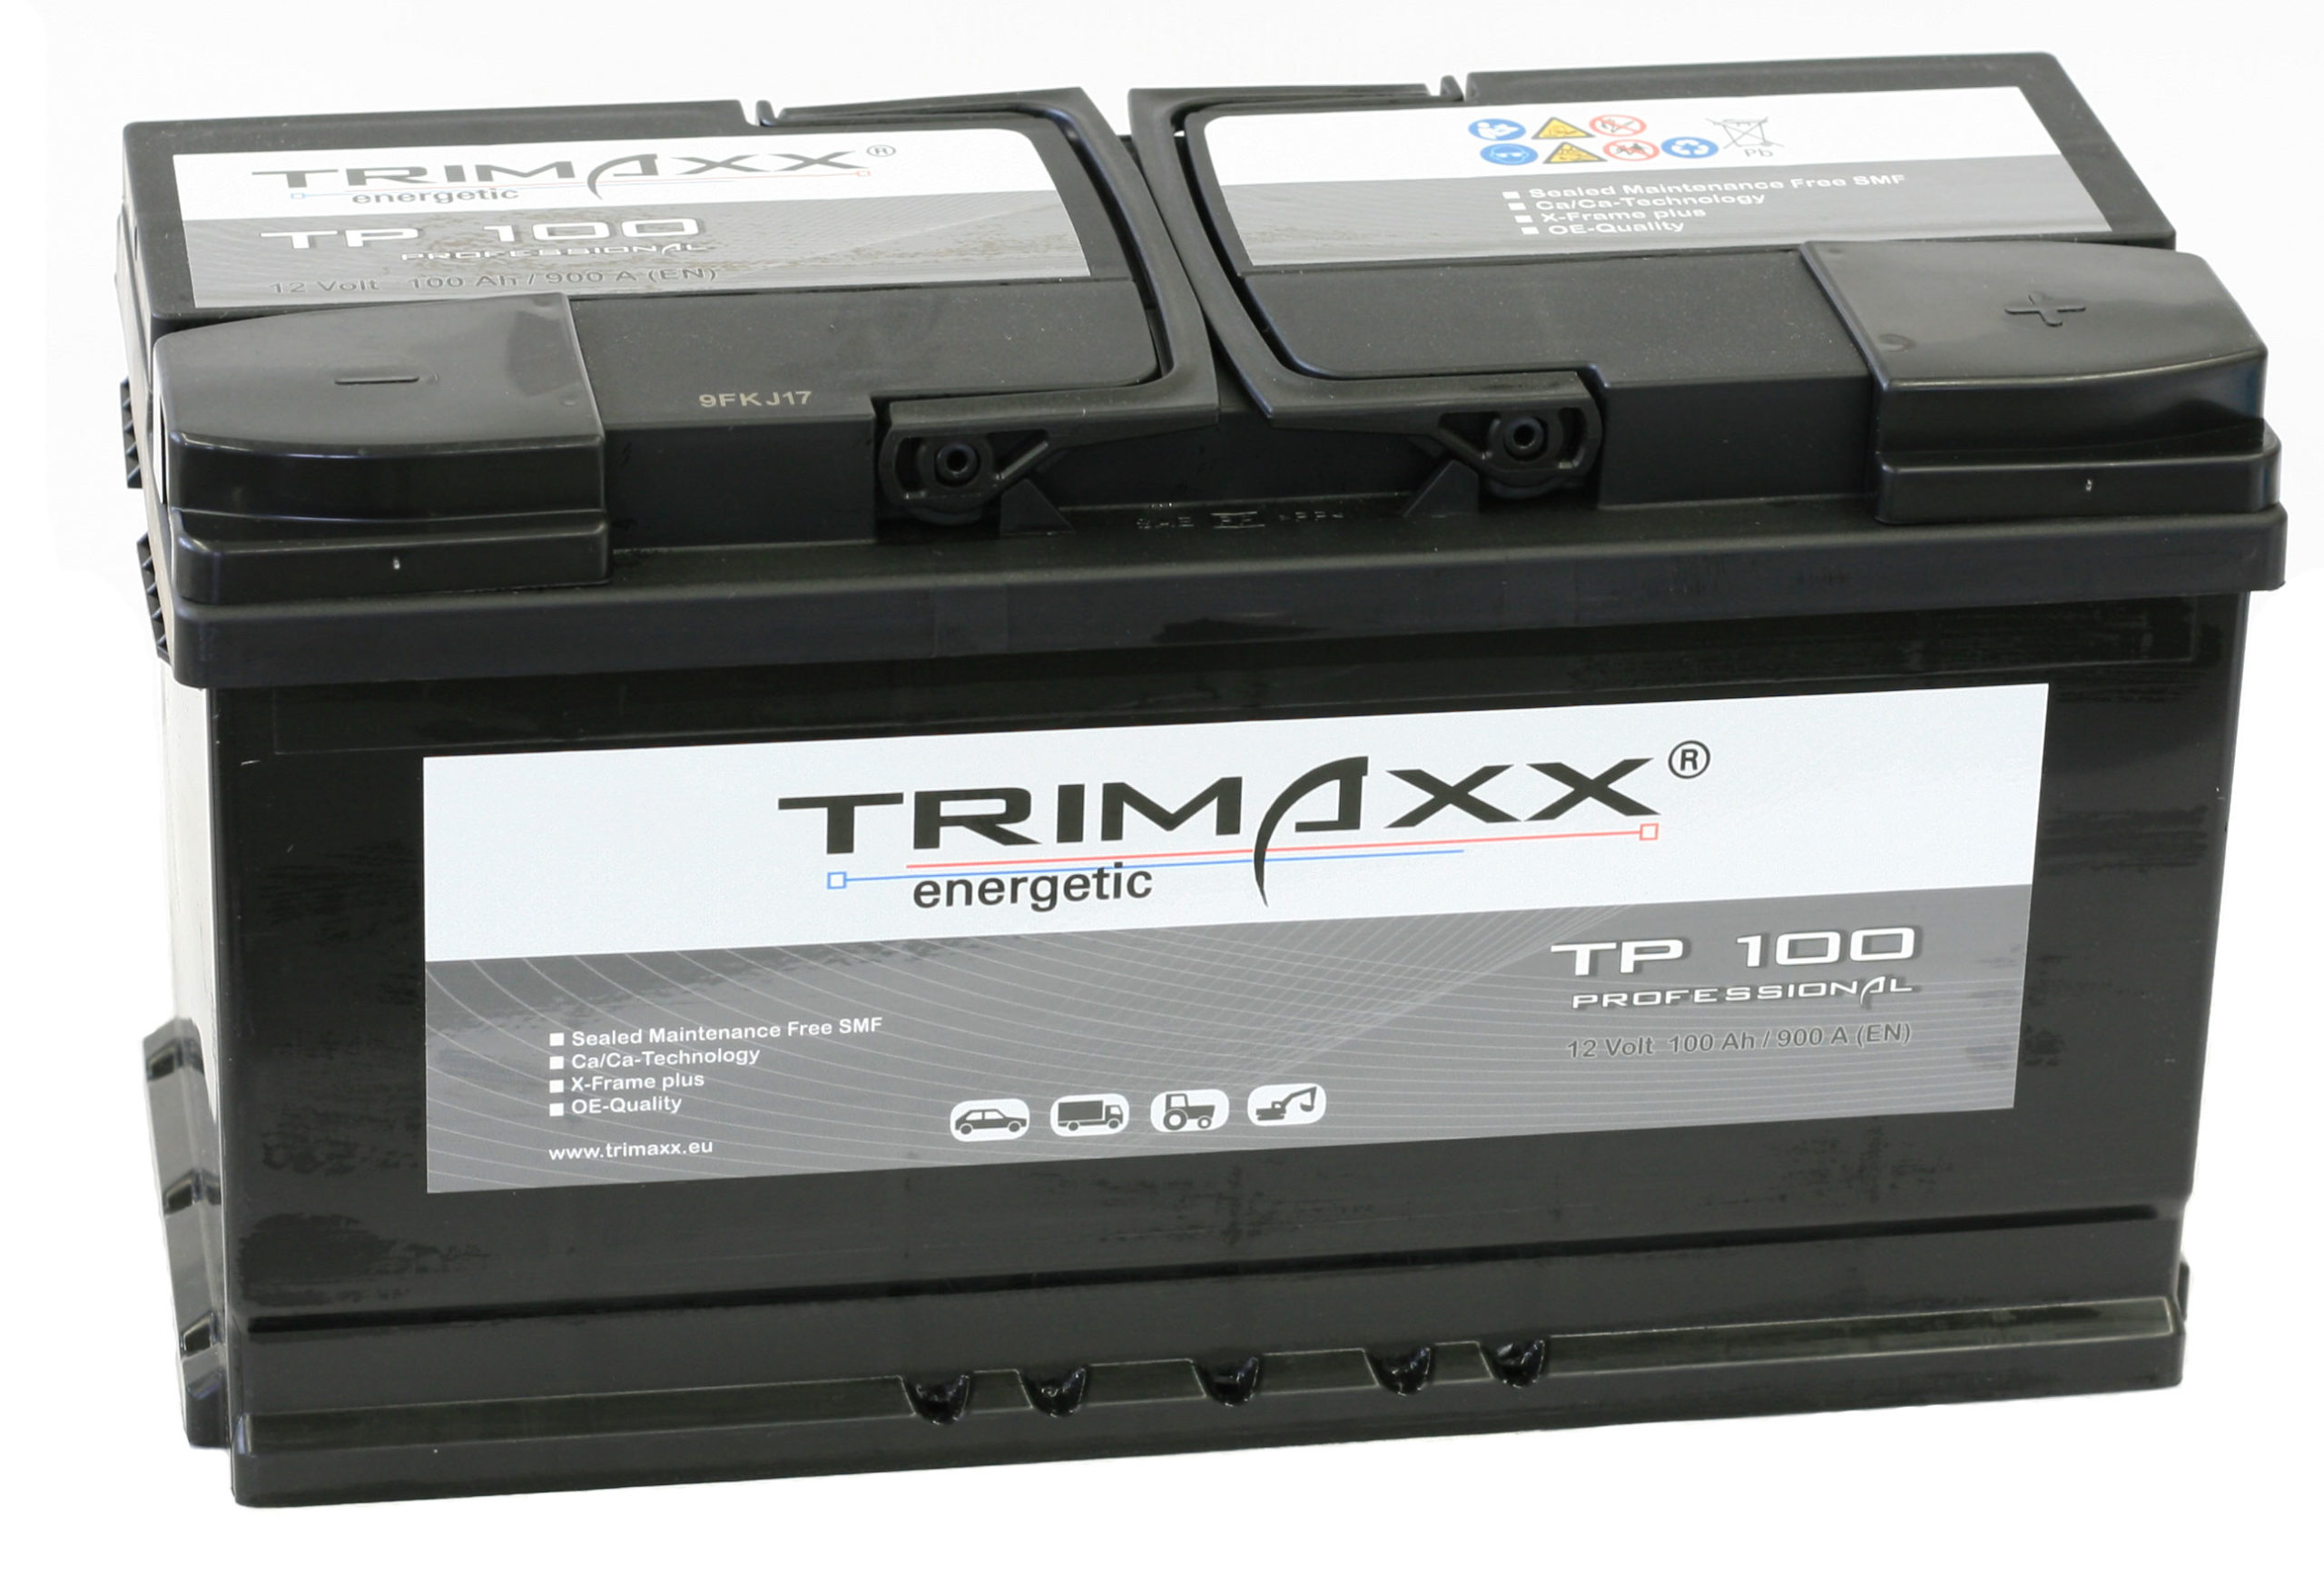 TRIMAXX energetic 12V 100Ah 900A(EN) - 1a Batterien GmbH